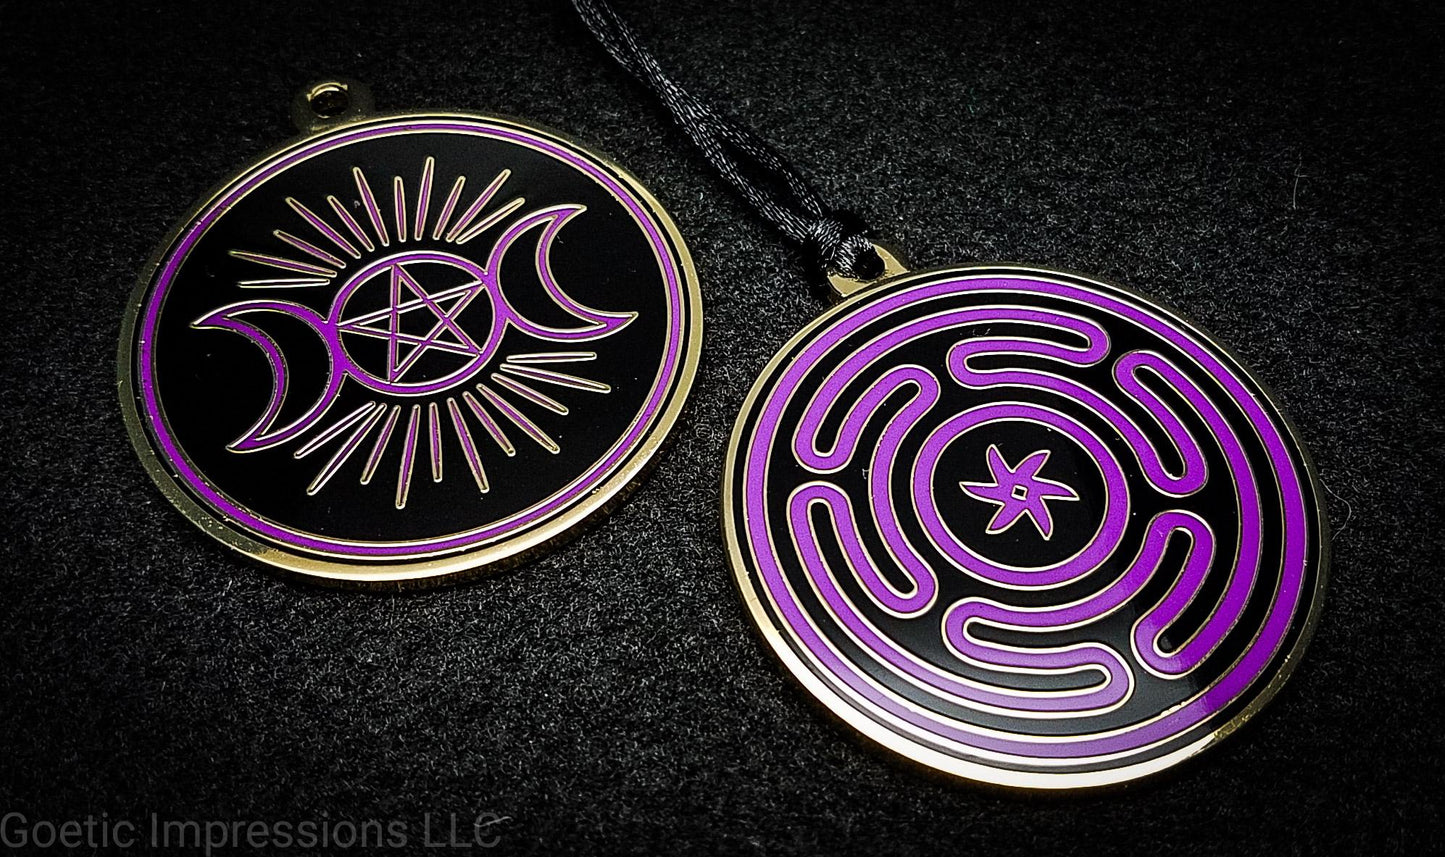 Gold Wheel of Hekate Sigil Pendant with Triple Moon Pentagram symbol on reverse side.